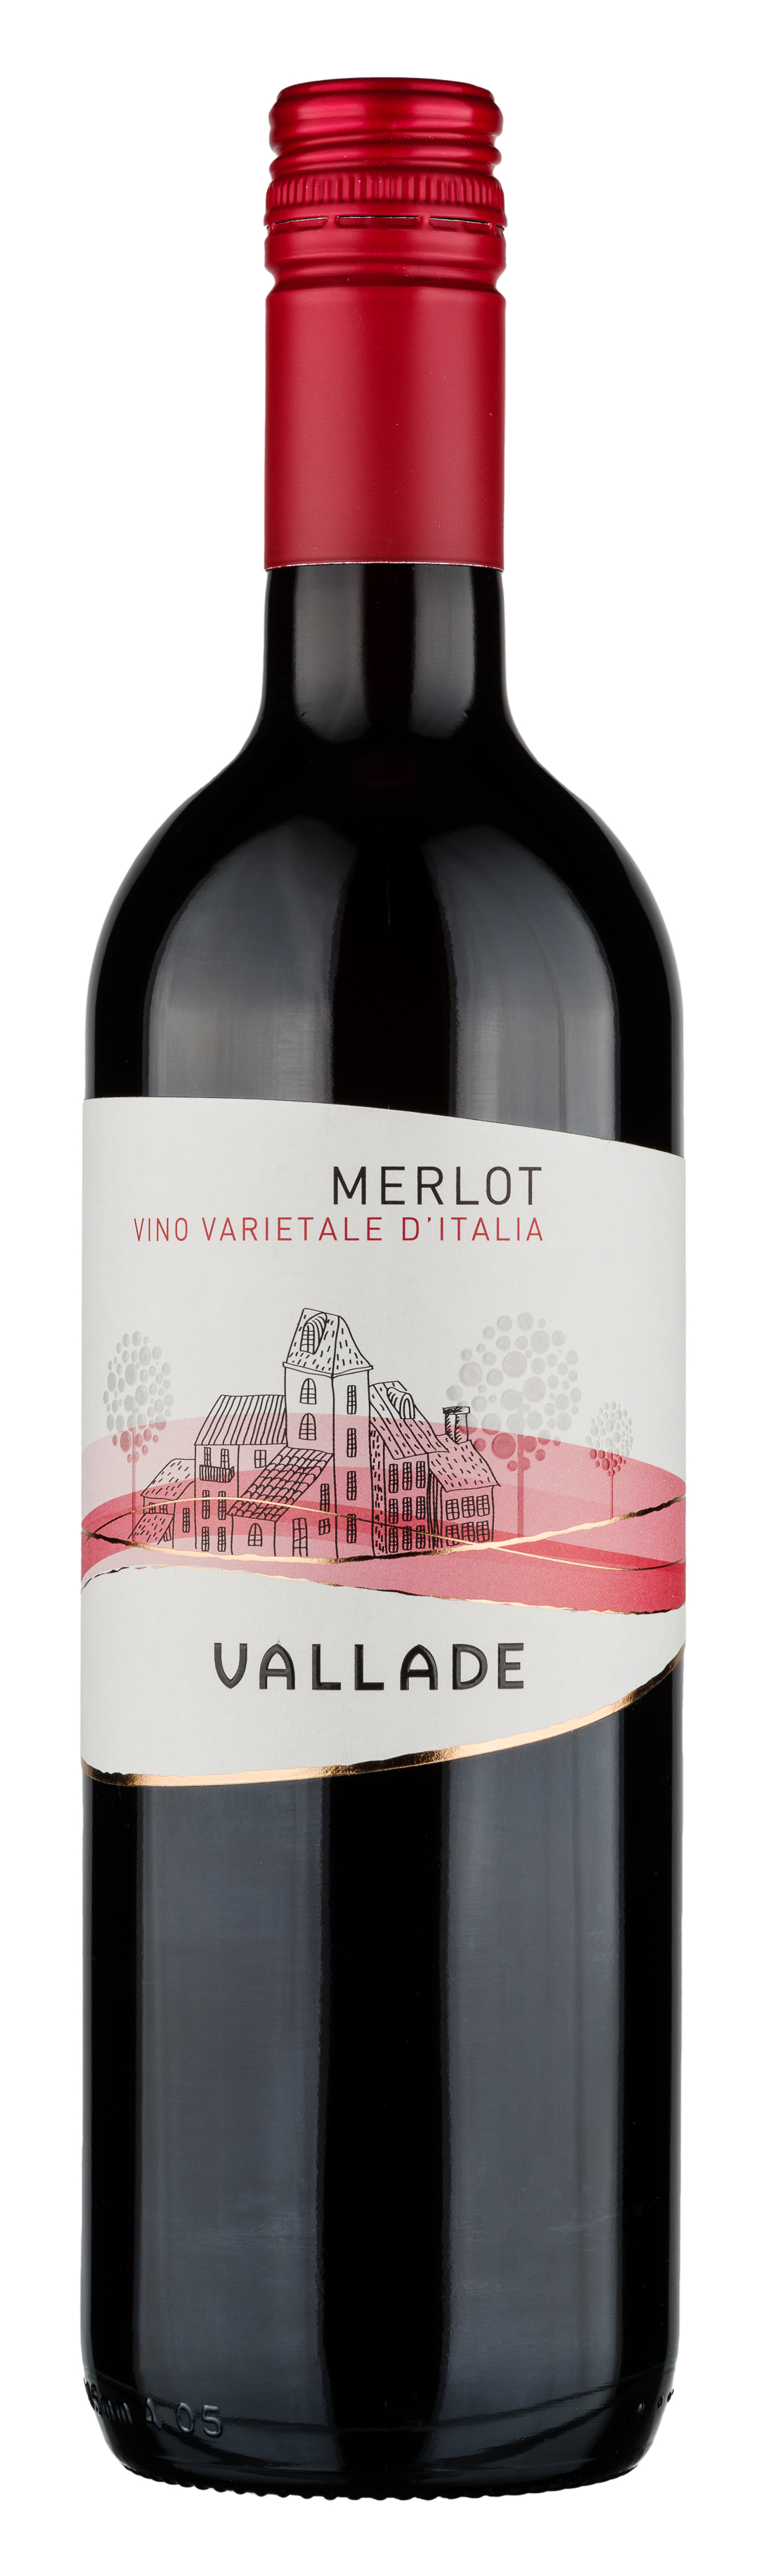 Wine Vallade Merlot